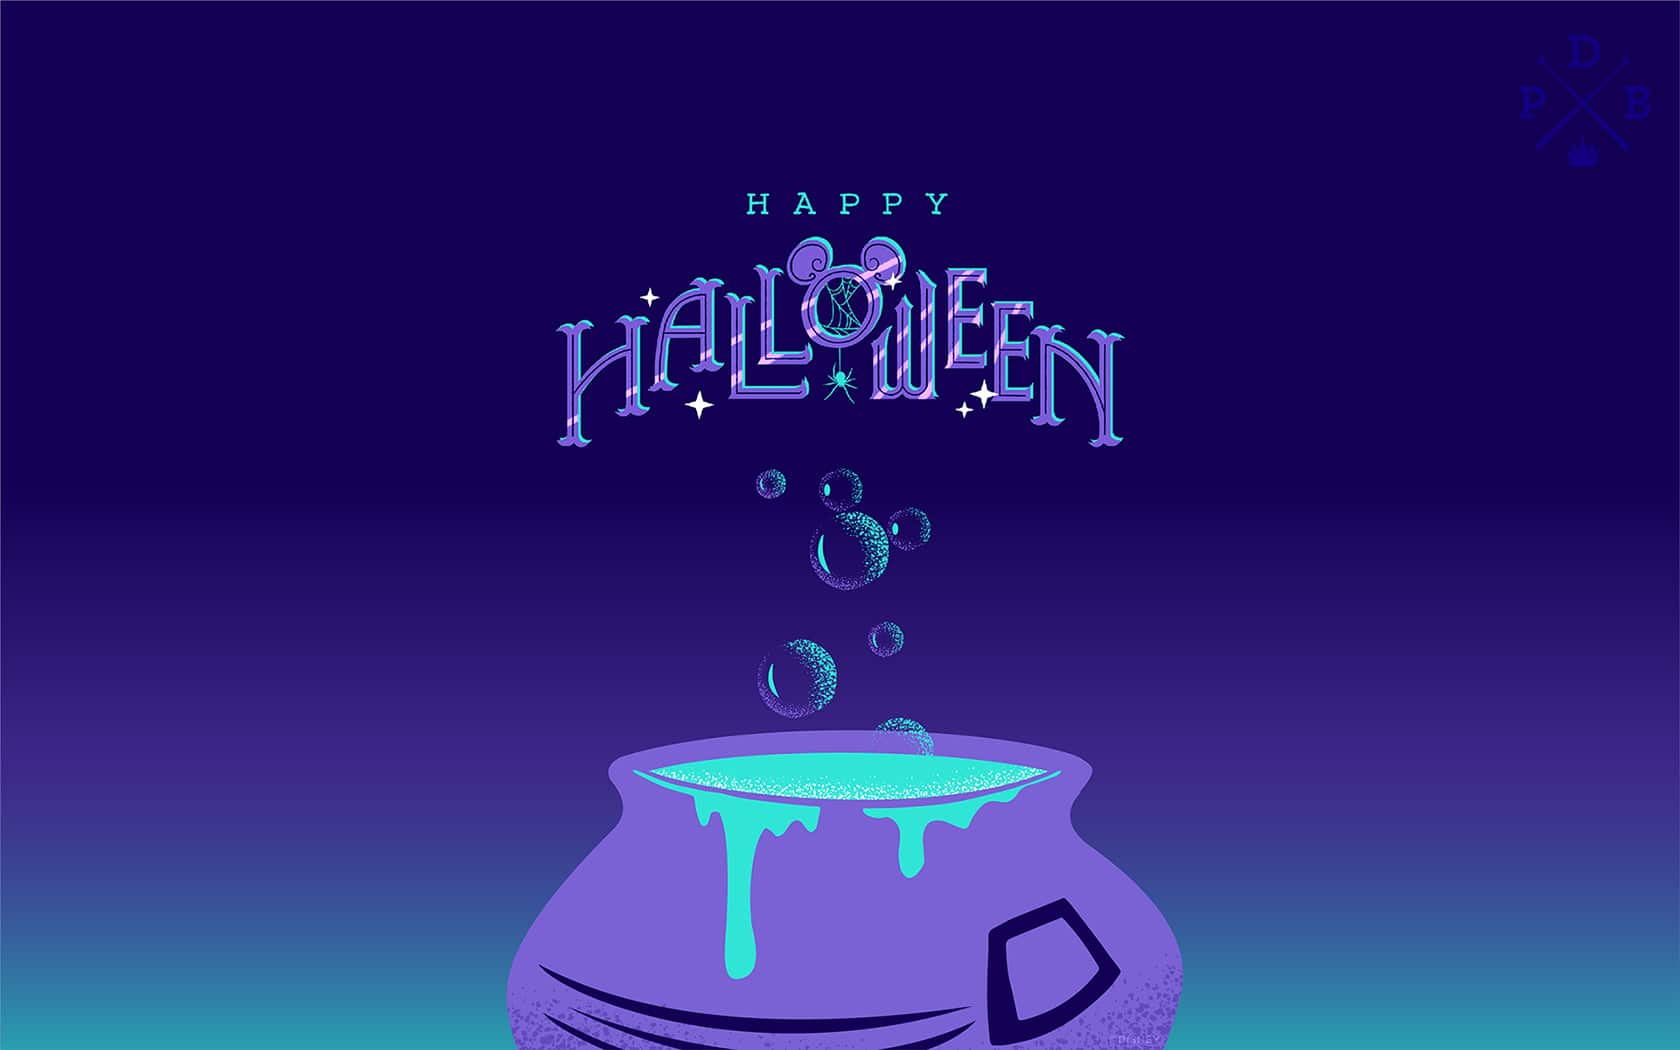 2020 Halloween Cauldron Wallpaper DesktopiPad Disney Parks Blog 1680x1050